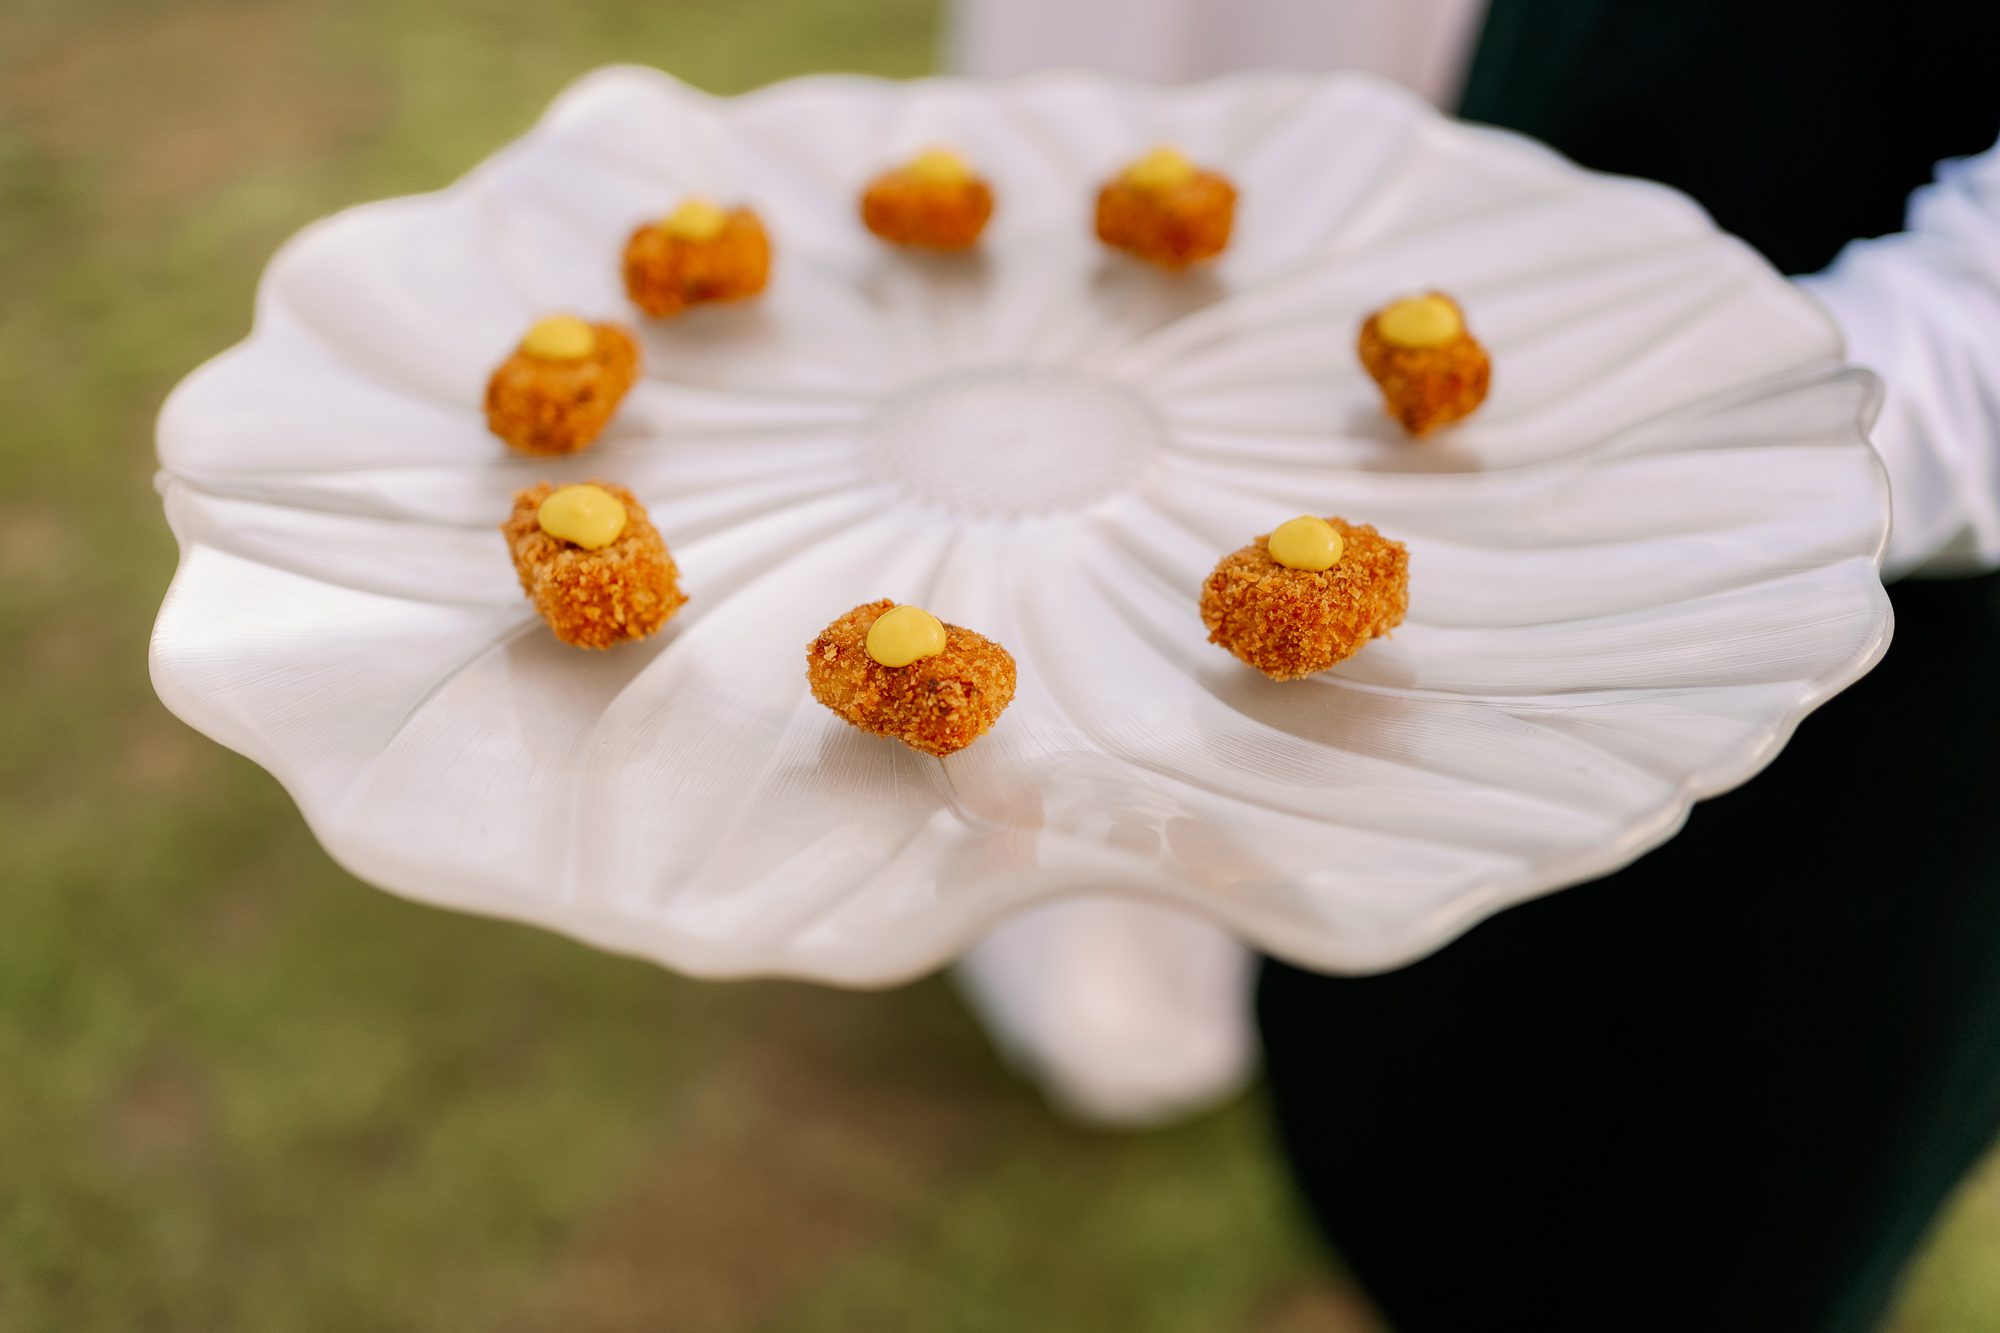 Rhubarb event food at an English homestead wedding.